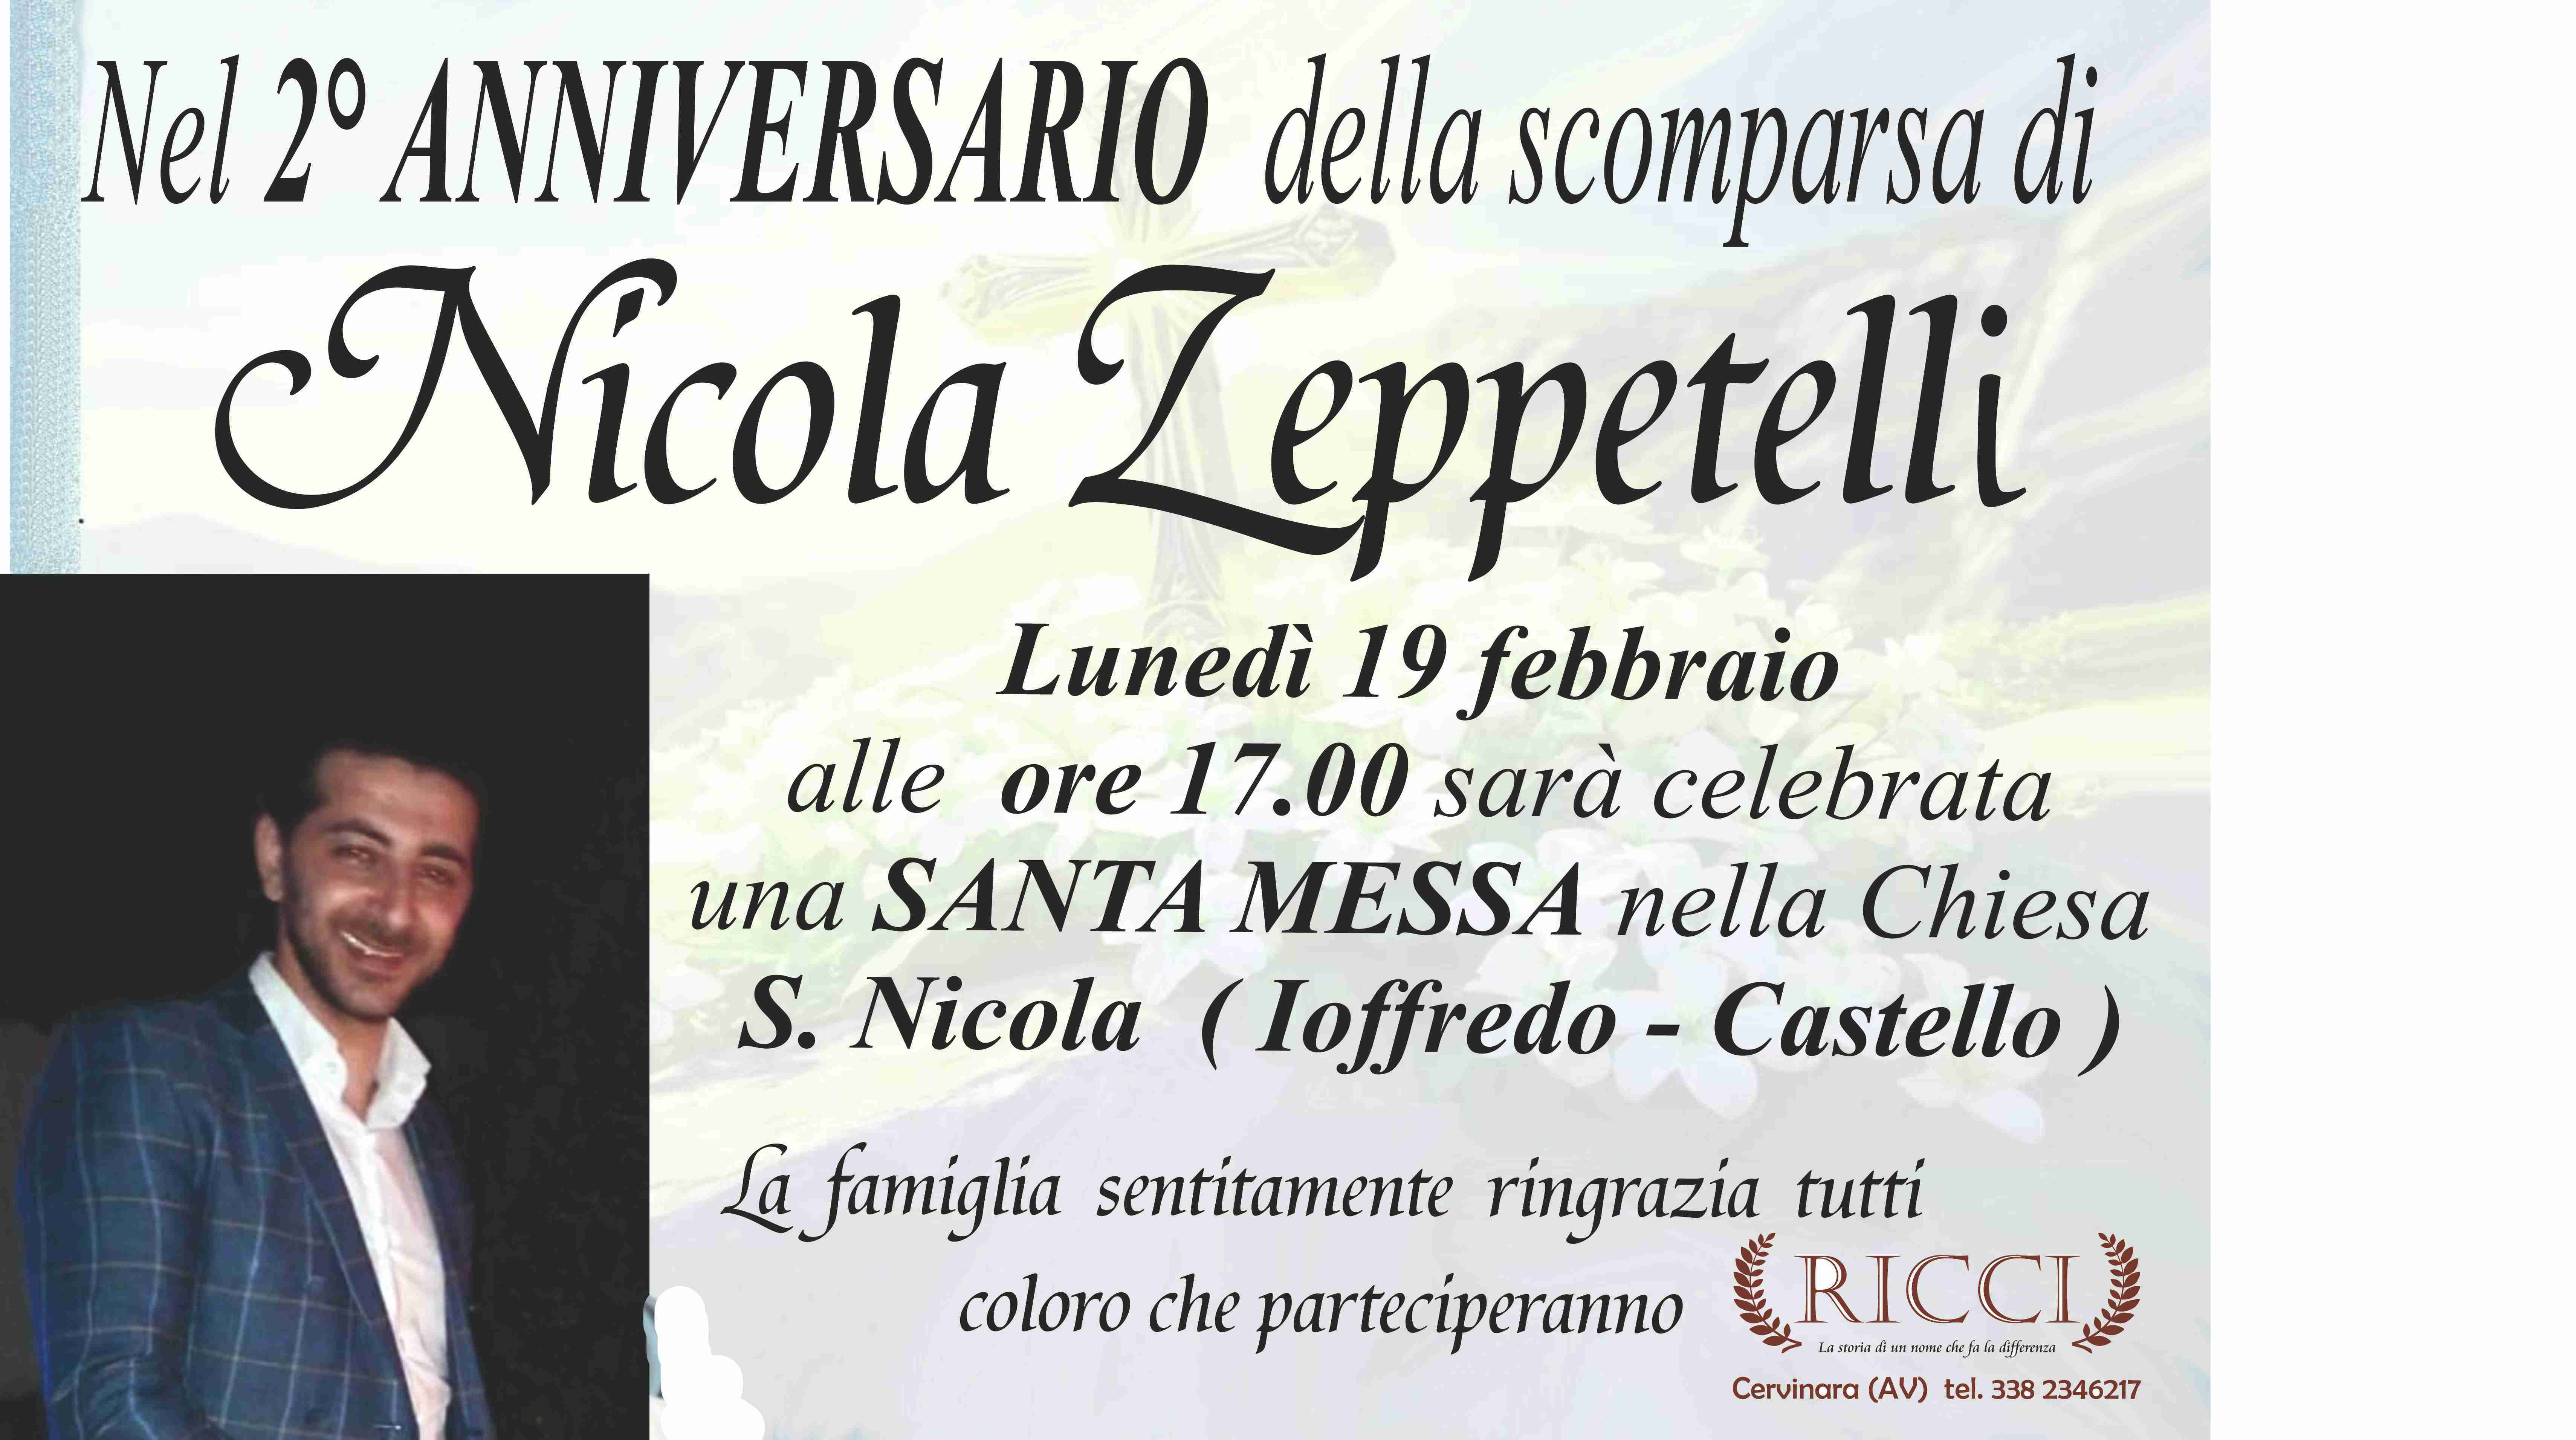 Nicola Zeppetelli